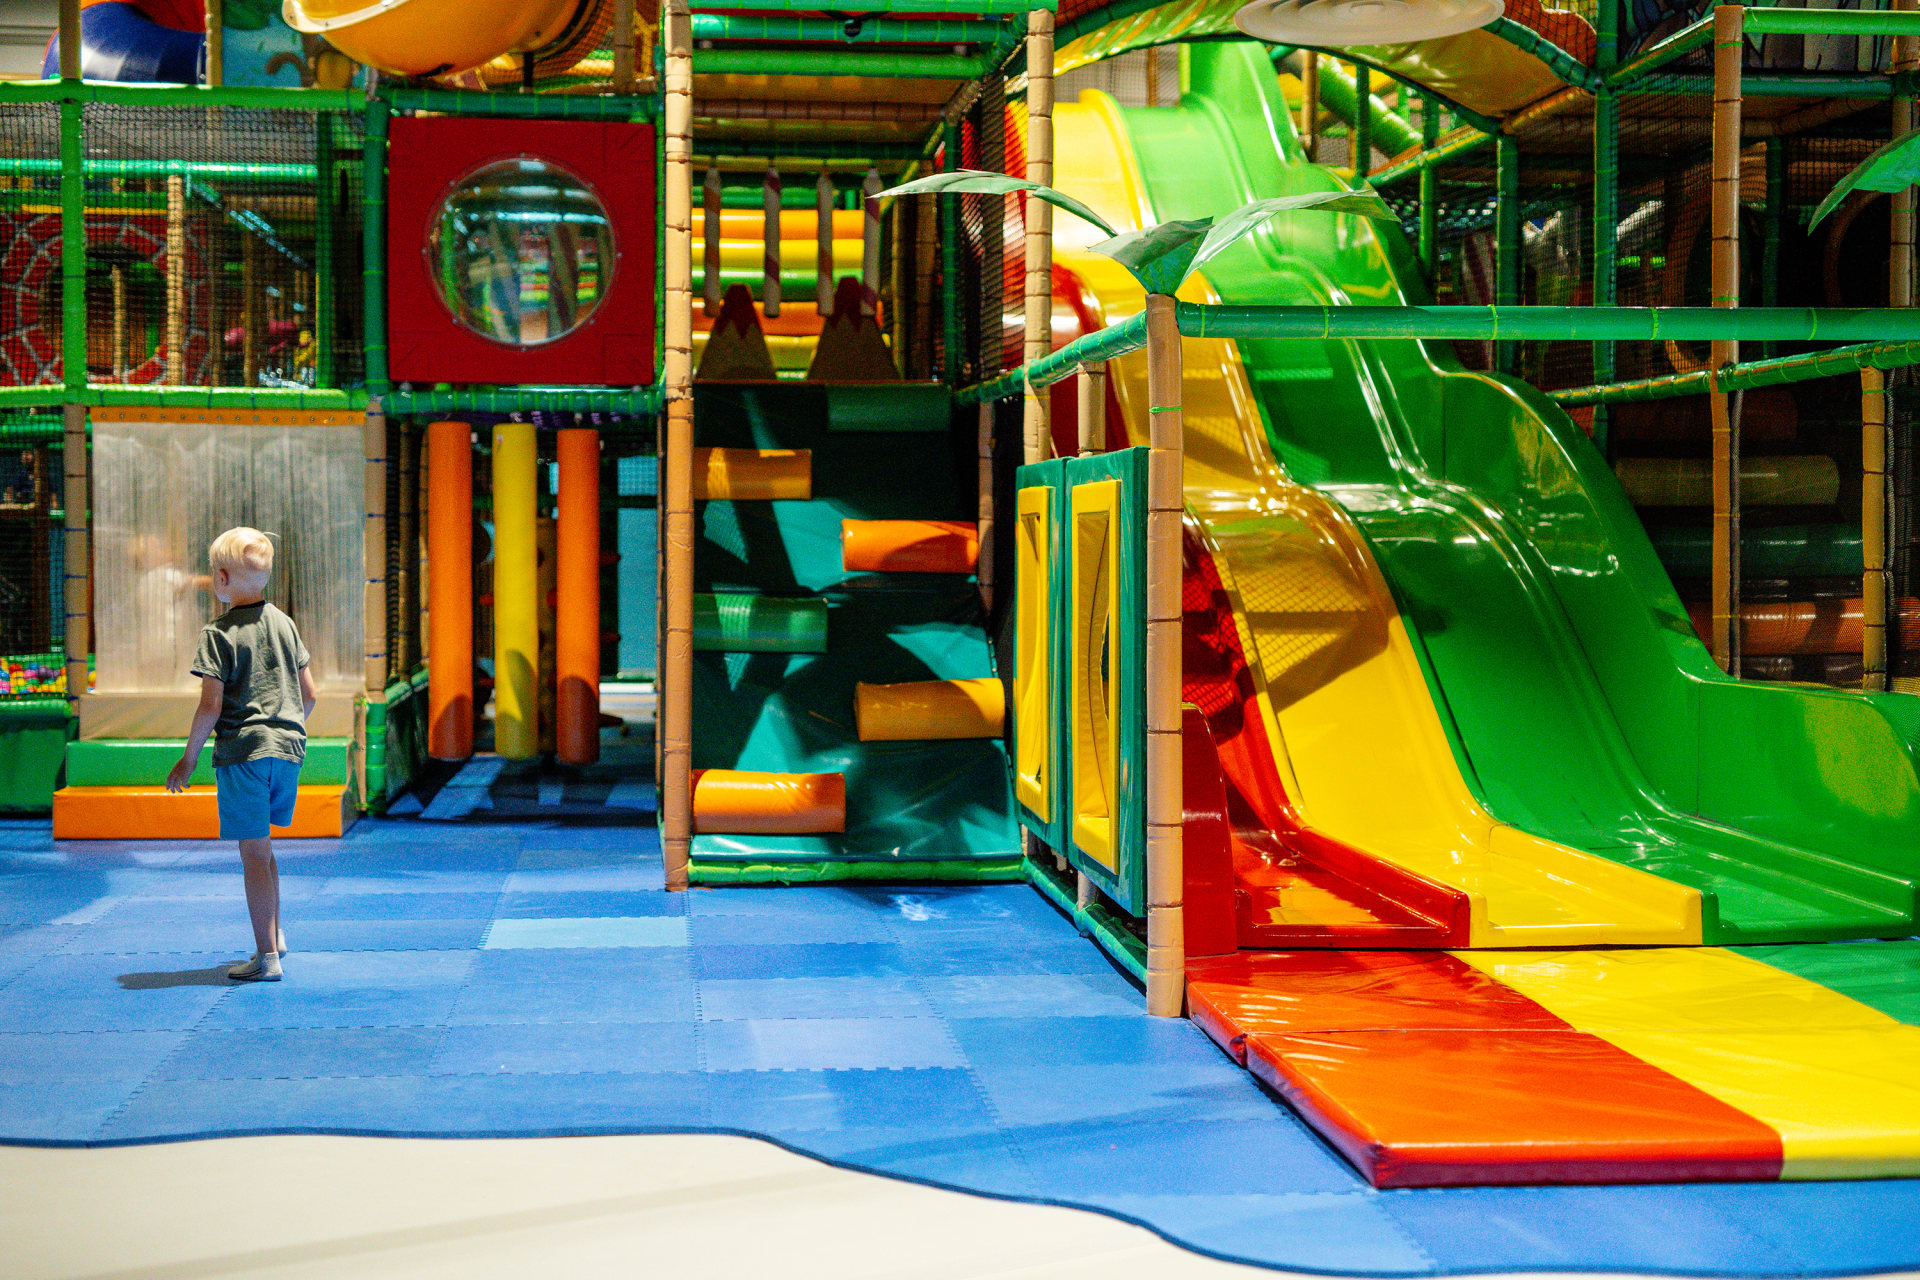 Skidipark is an activity park for children.